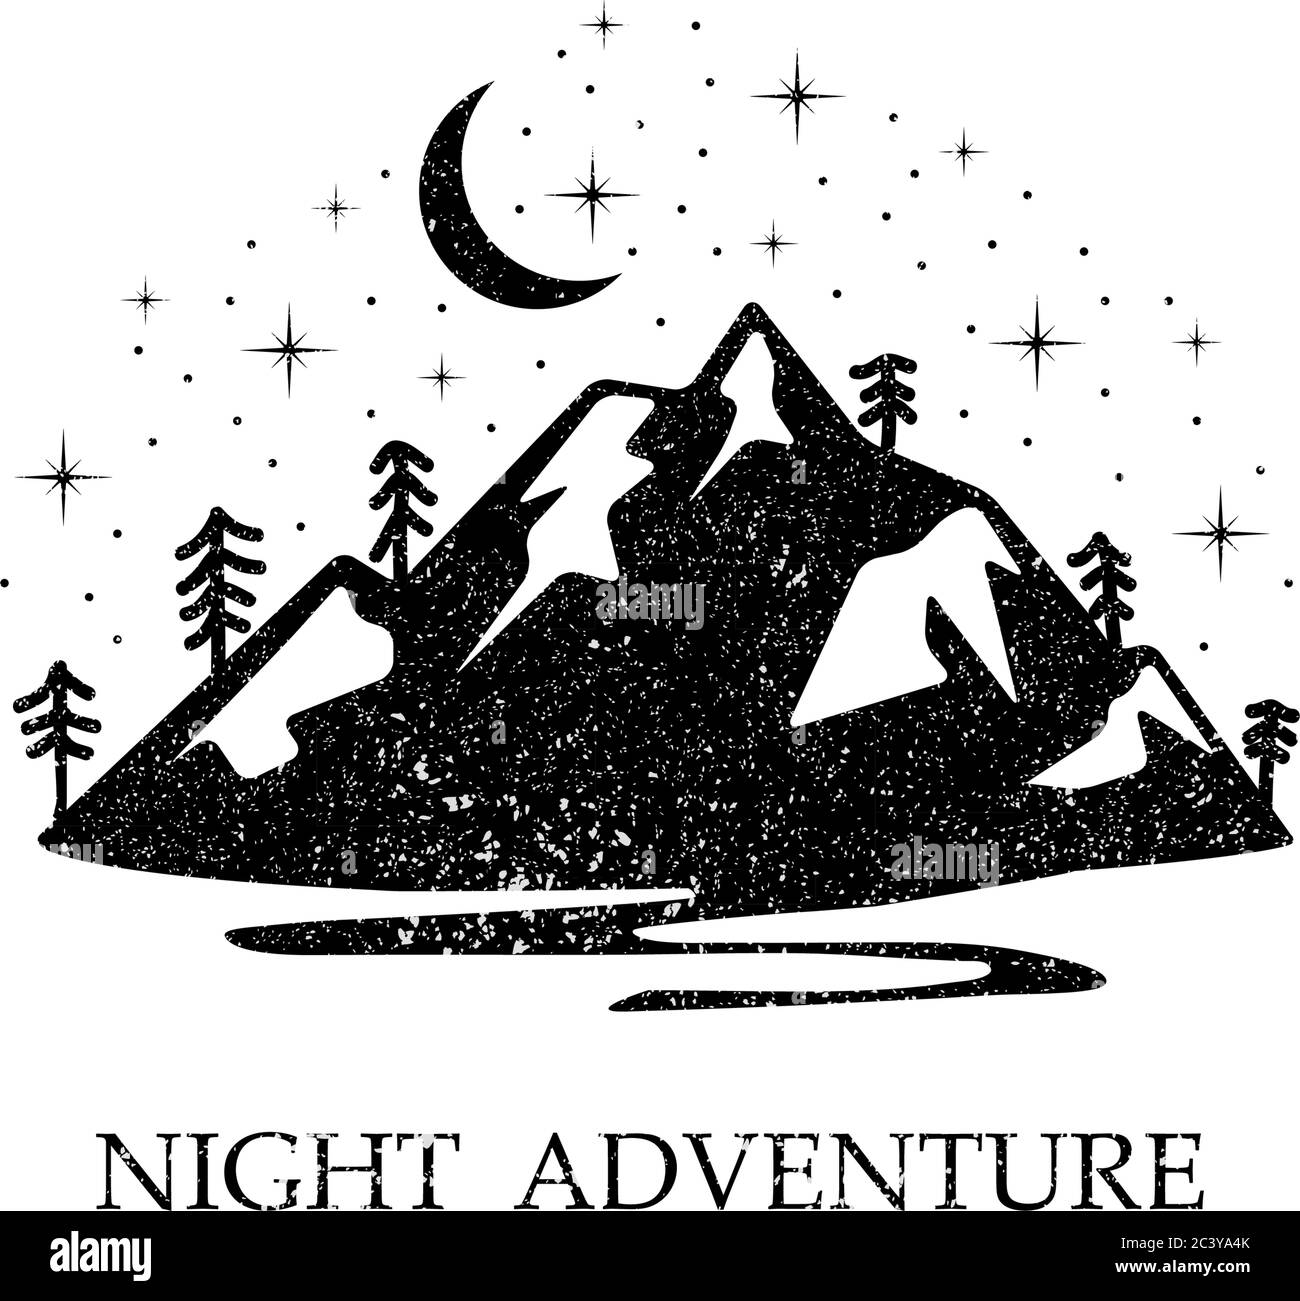 Night Adventure in the mountains, Beauty mountain logo designs, rustic logo vector illustration Stock Vector